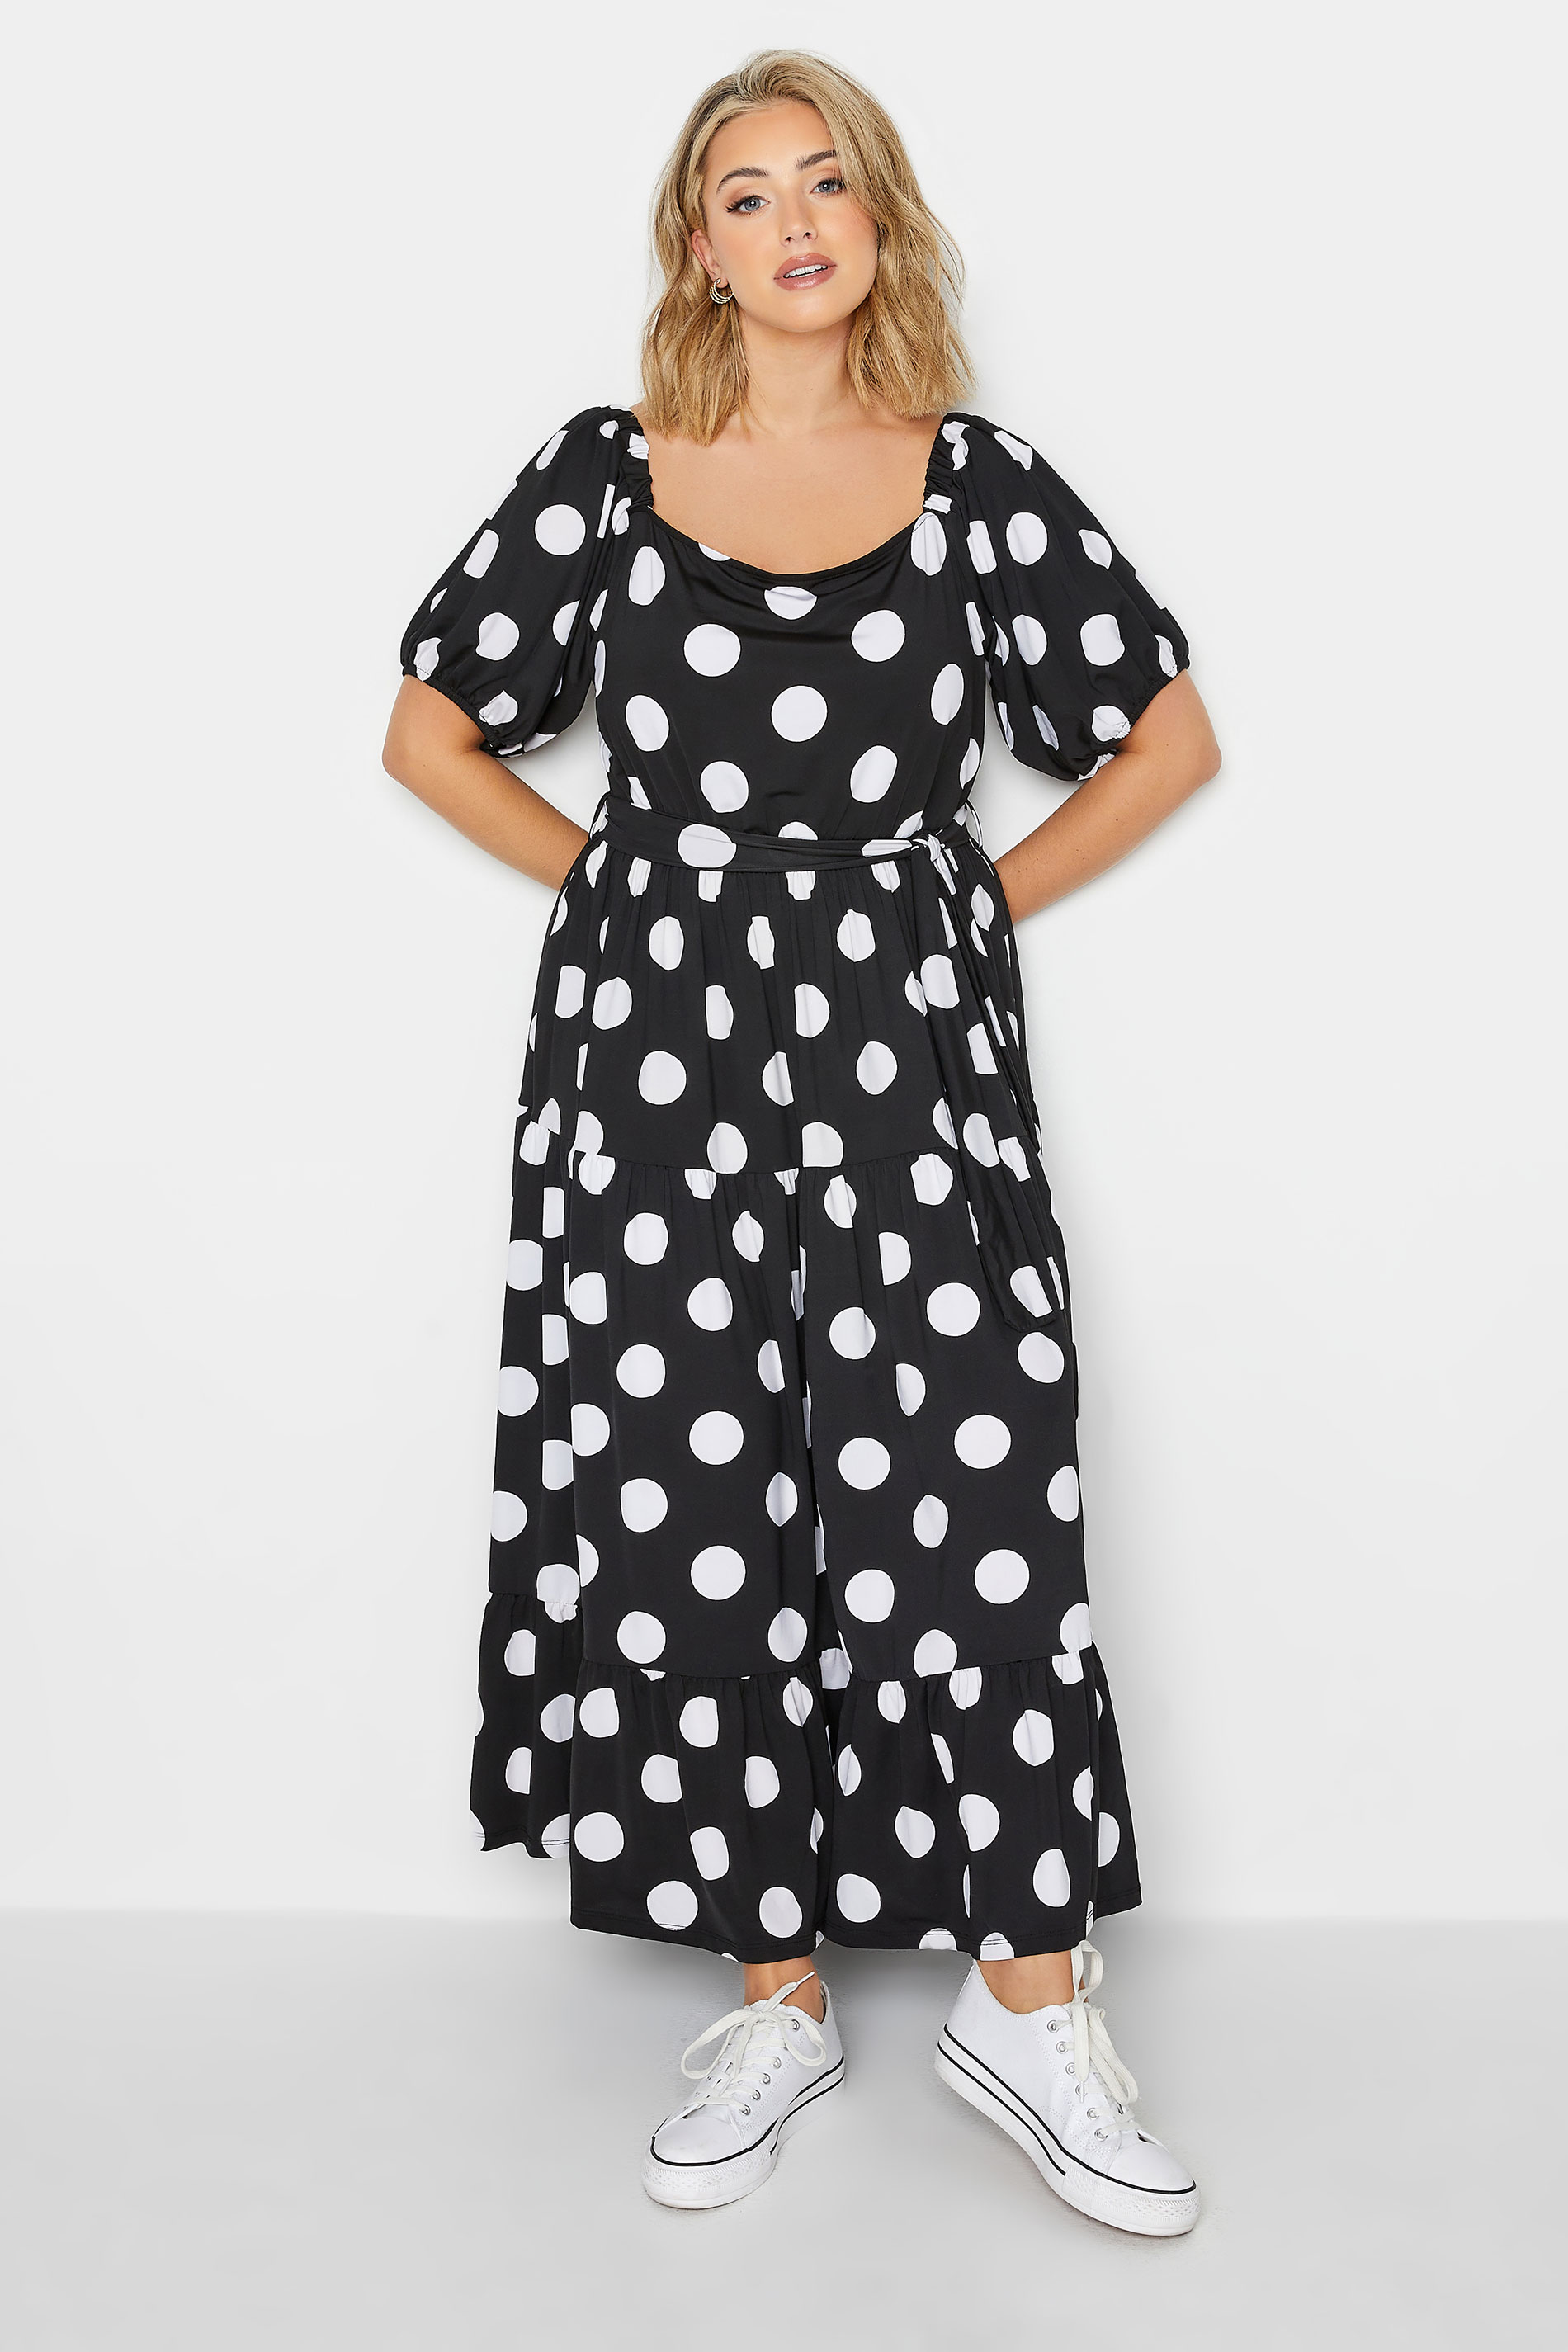 19+ Polka Dot Plus Size Dresses